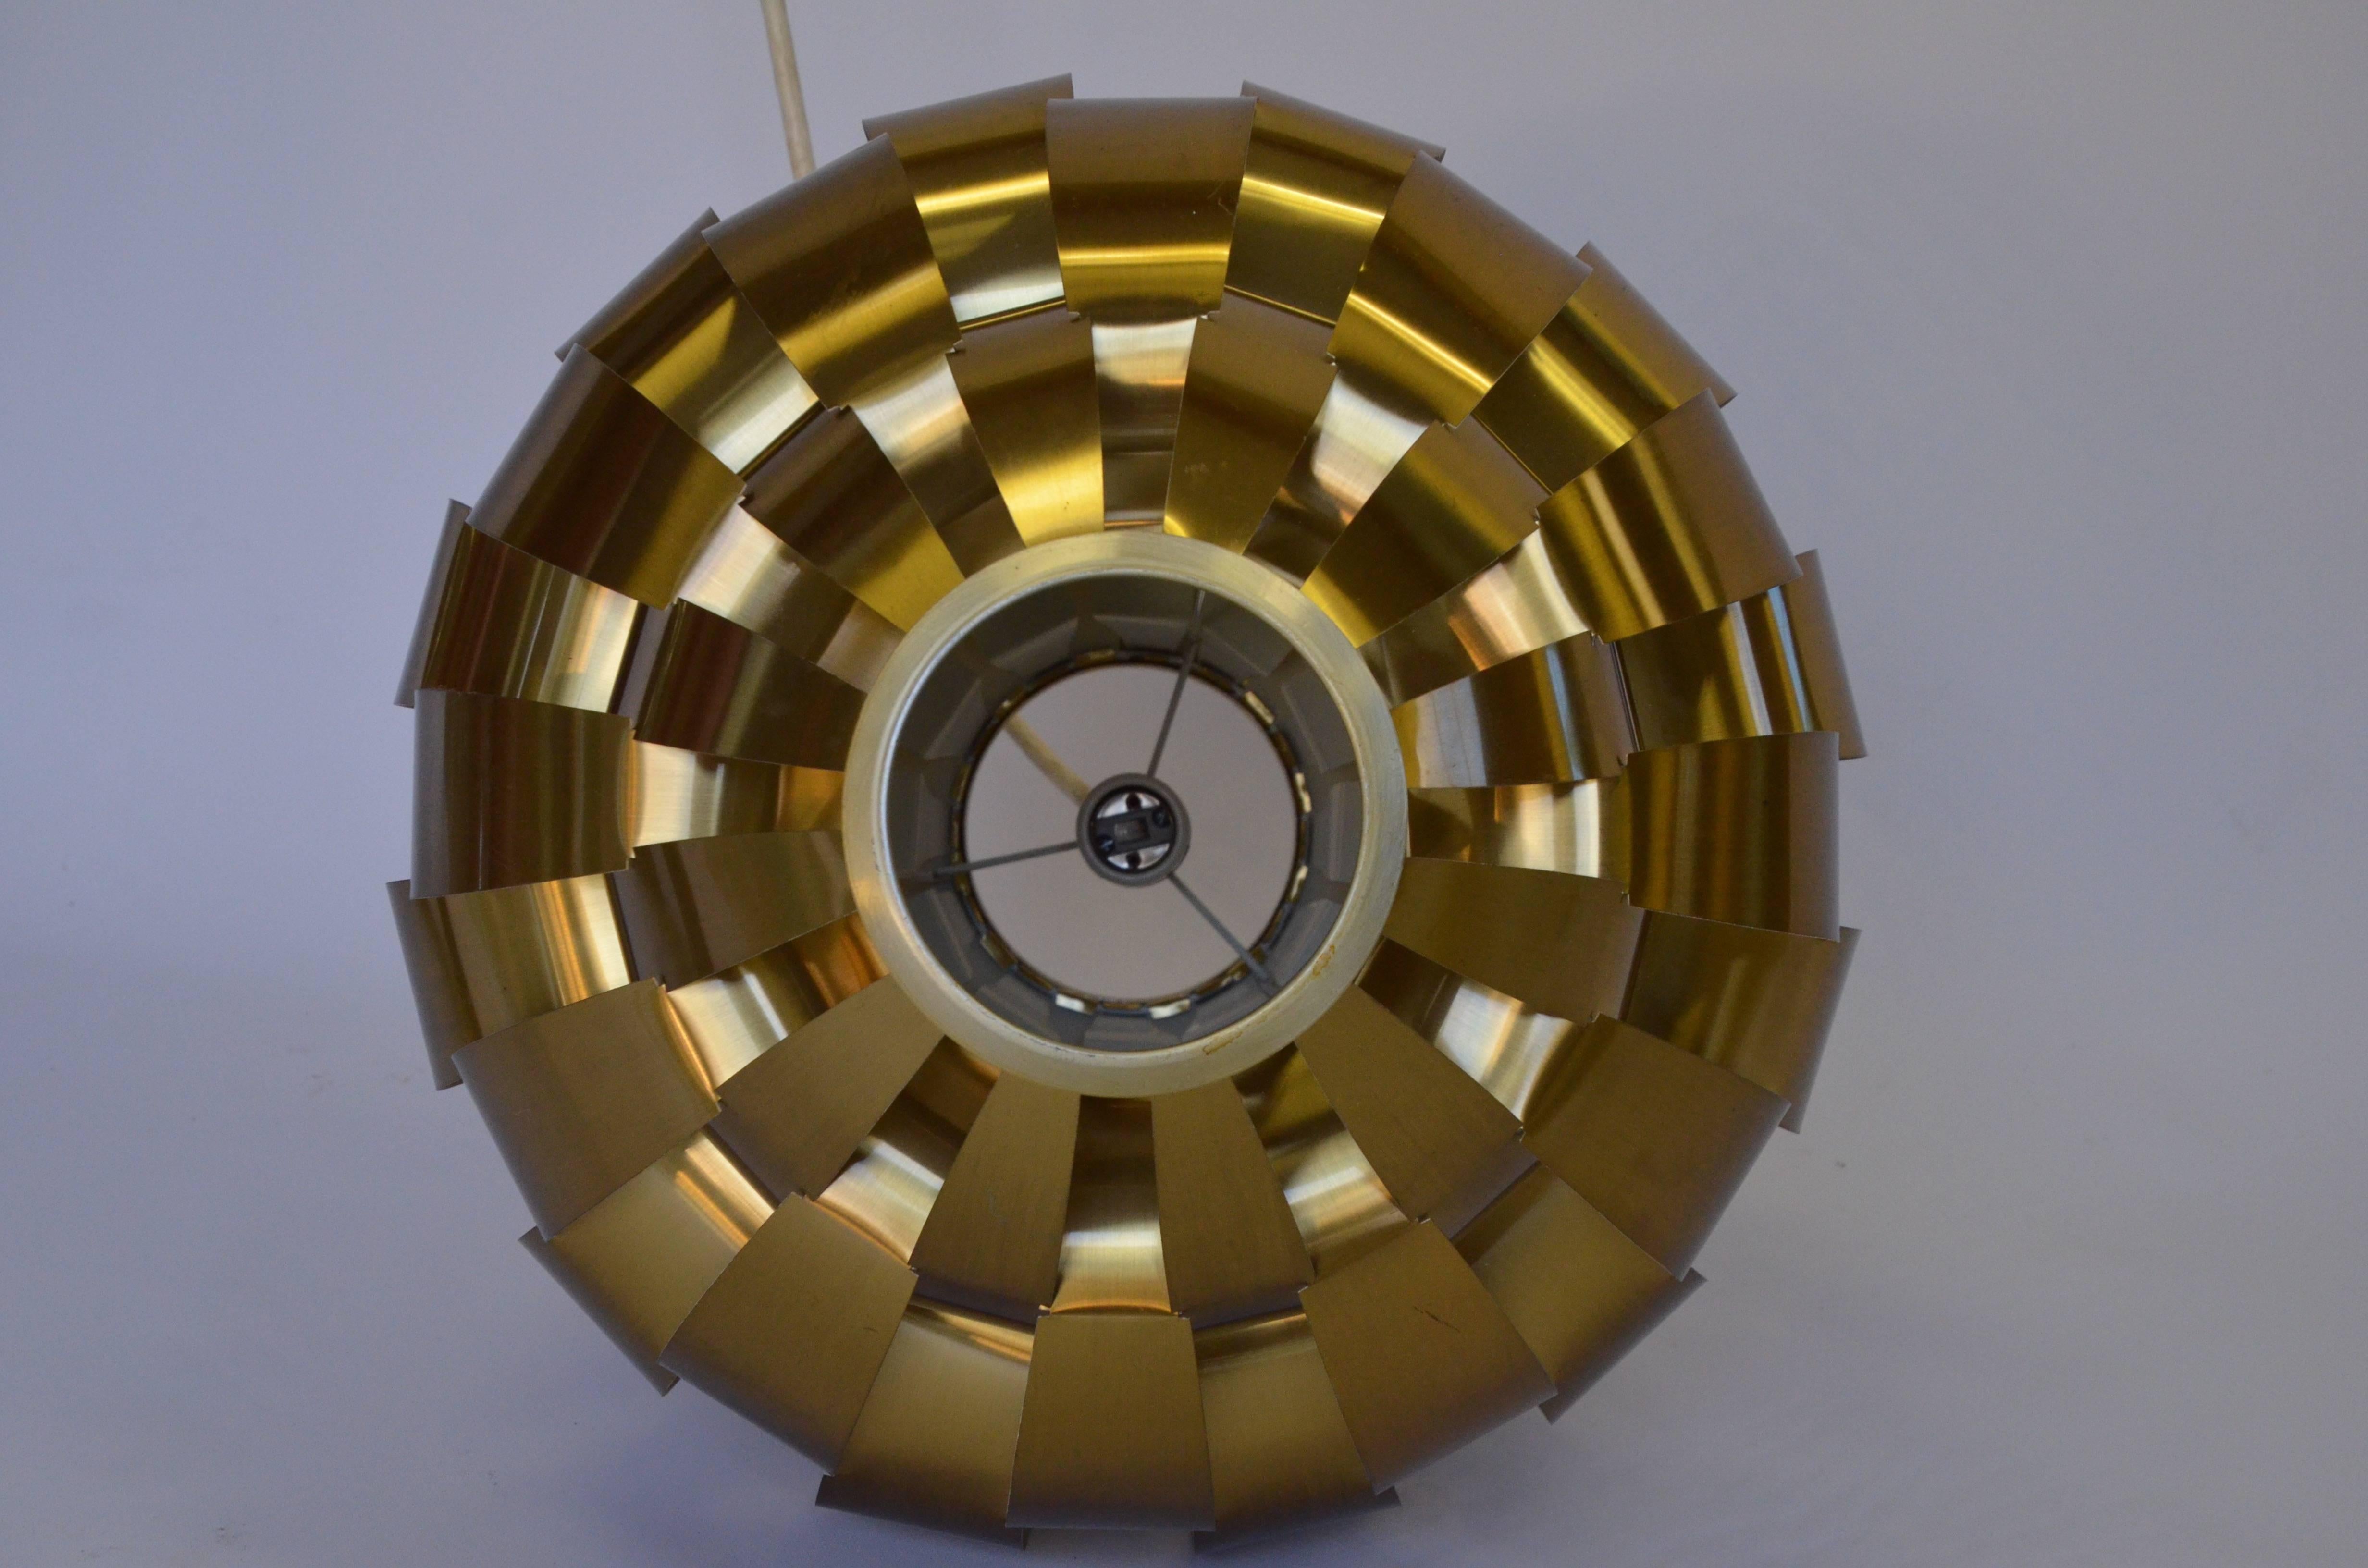 Lightolier brass ribbon pendant. The brushed brass chandelier is woven in a spherical shape. Measuring 16